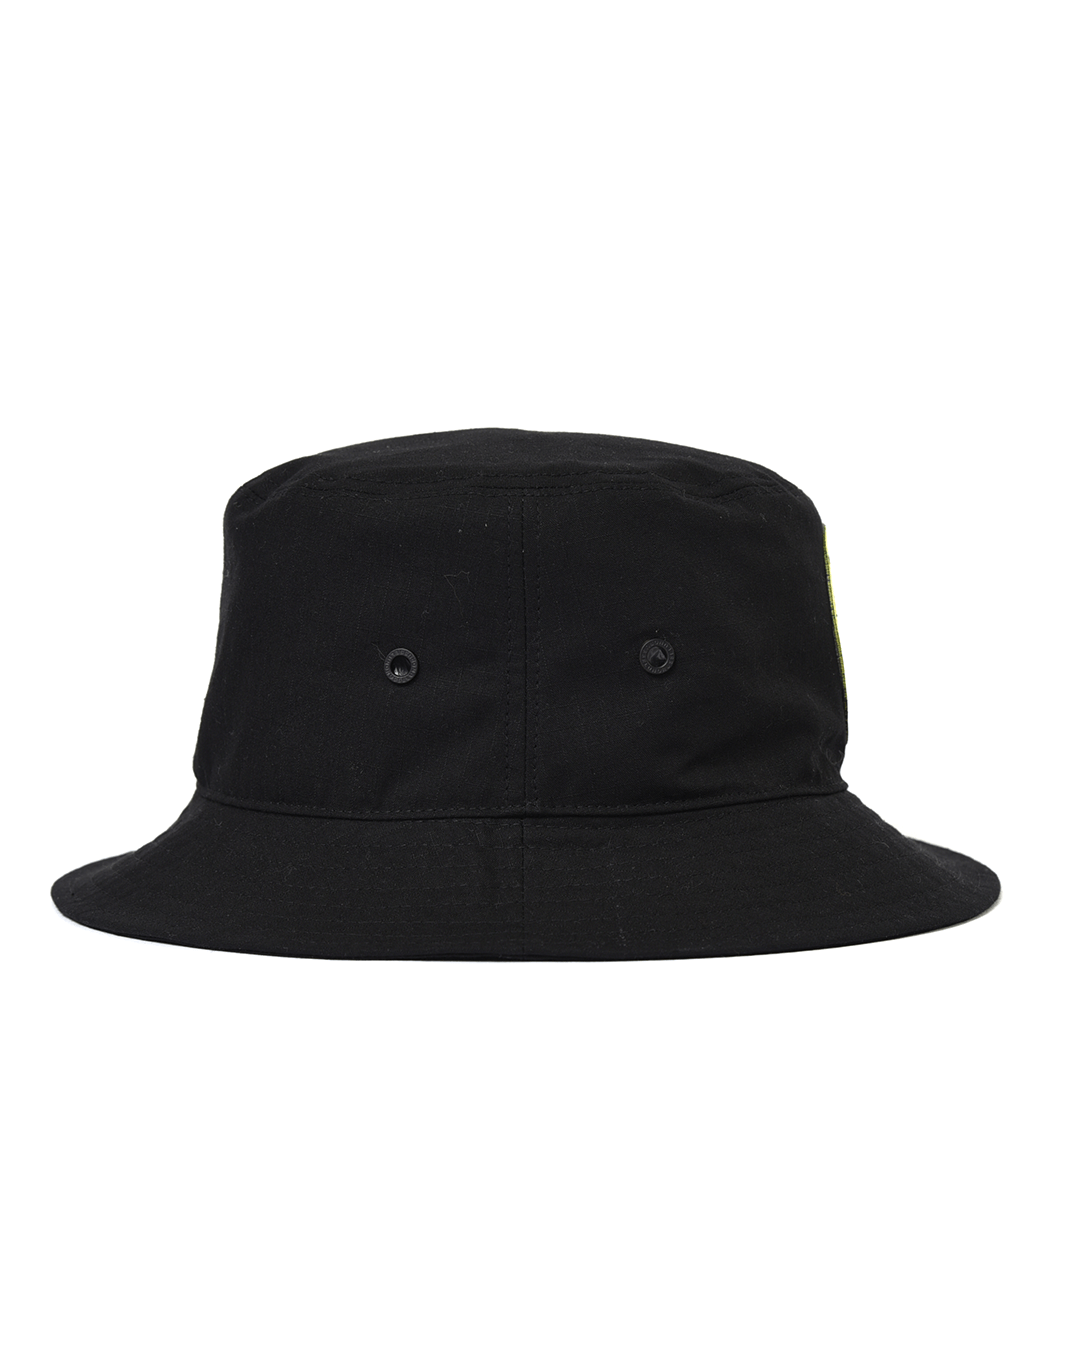 Russeluno Online Store / GOLF BUCKET HAT (TEAM M.C.C)